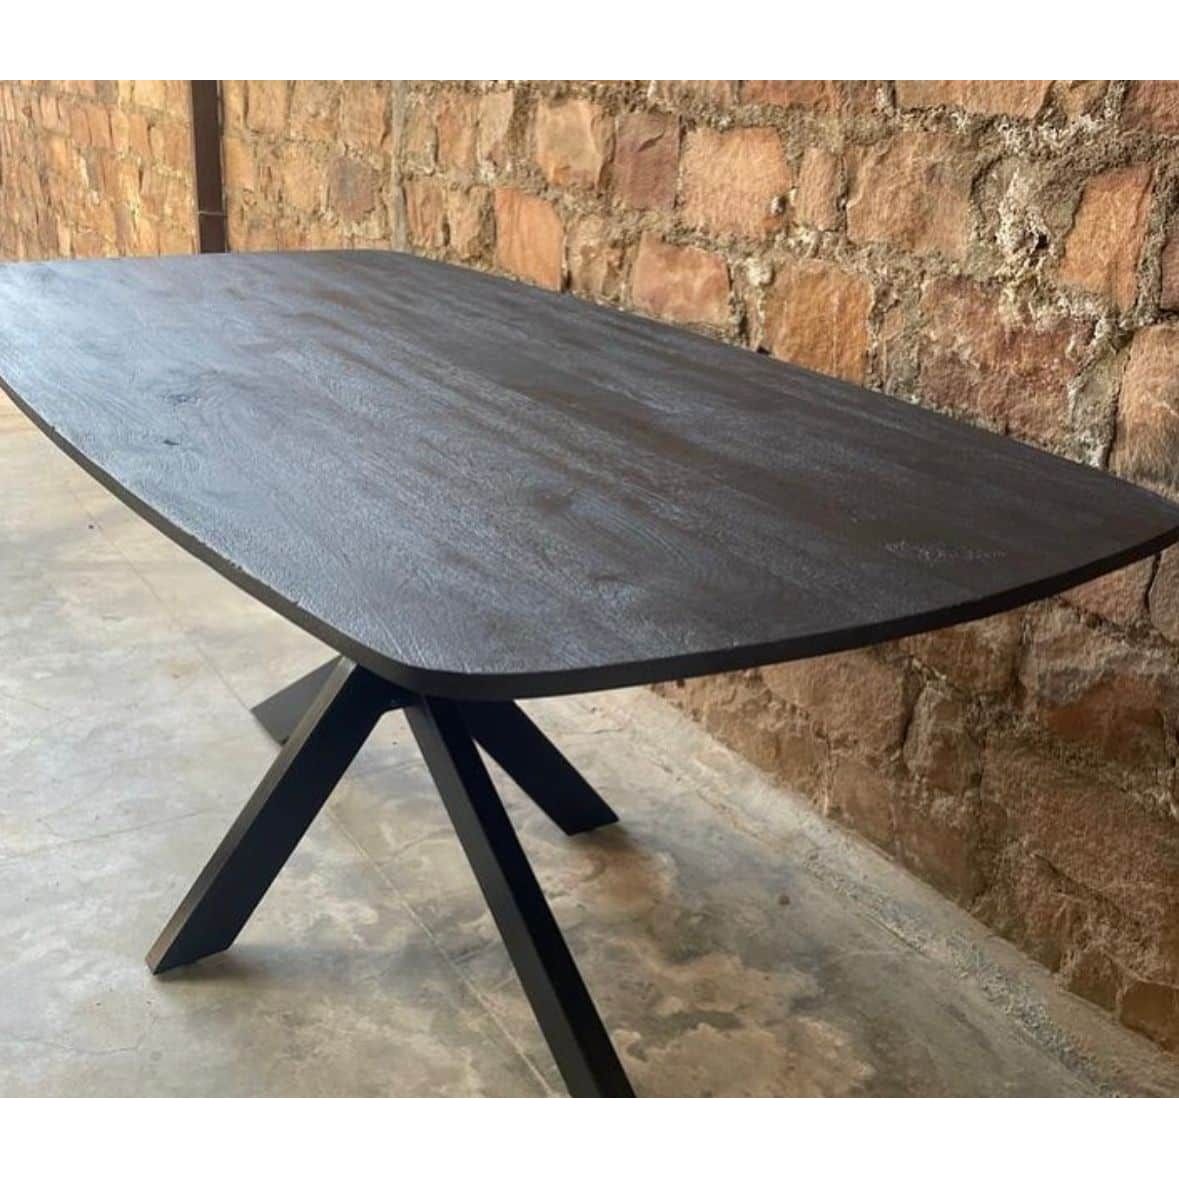 Bahia table Danish oval black - 180cm